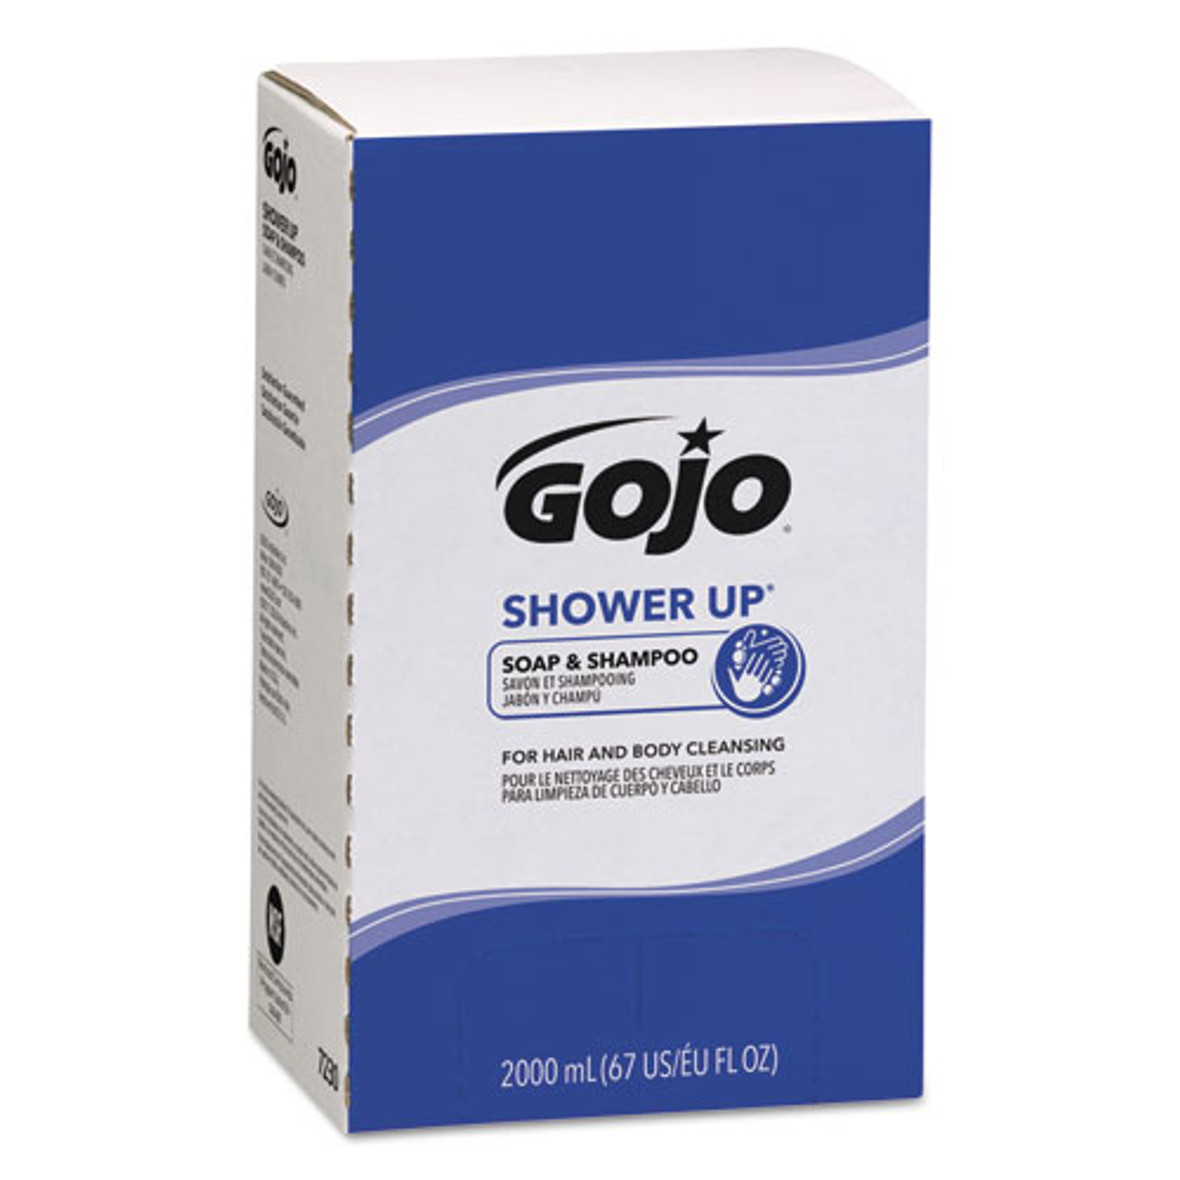 GOJO® SHOWER UP Soap and Shampoo